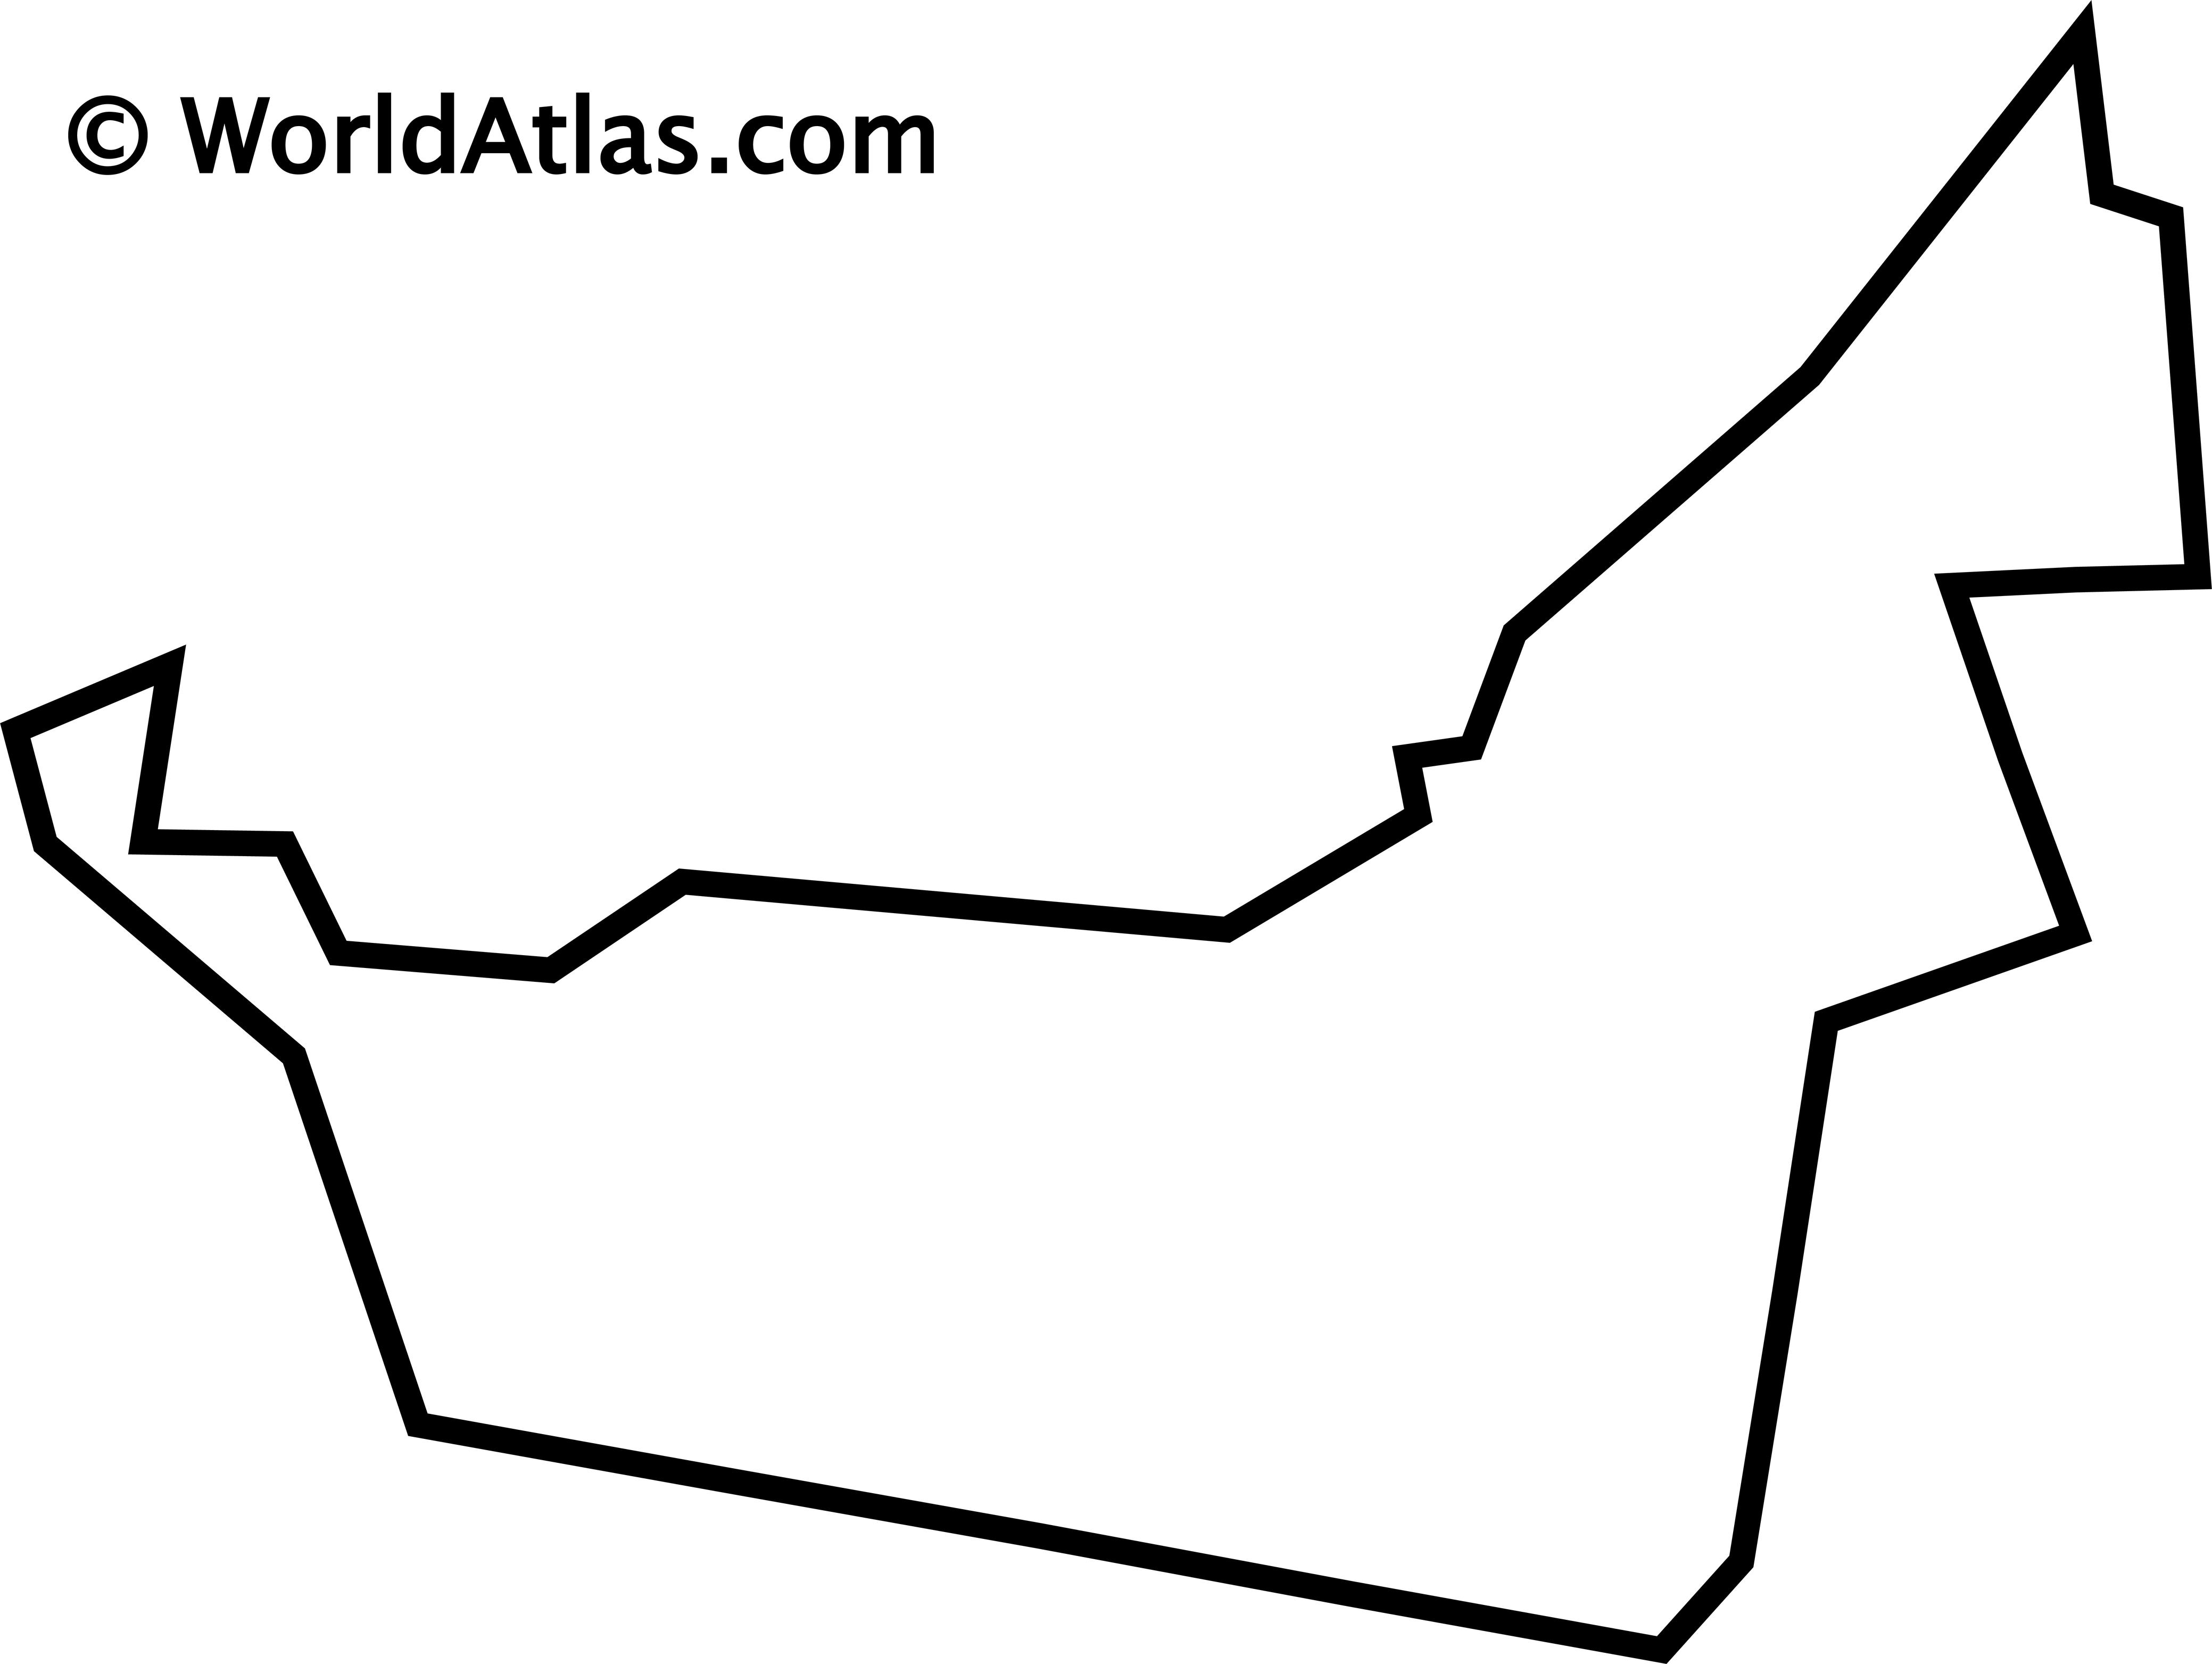 The United Arab Emirates Maps & Facts - World Atlas